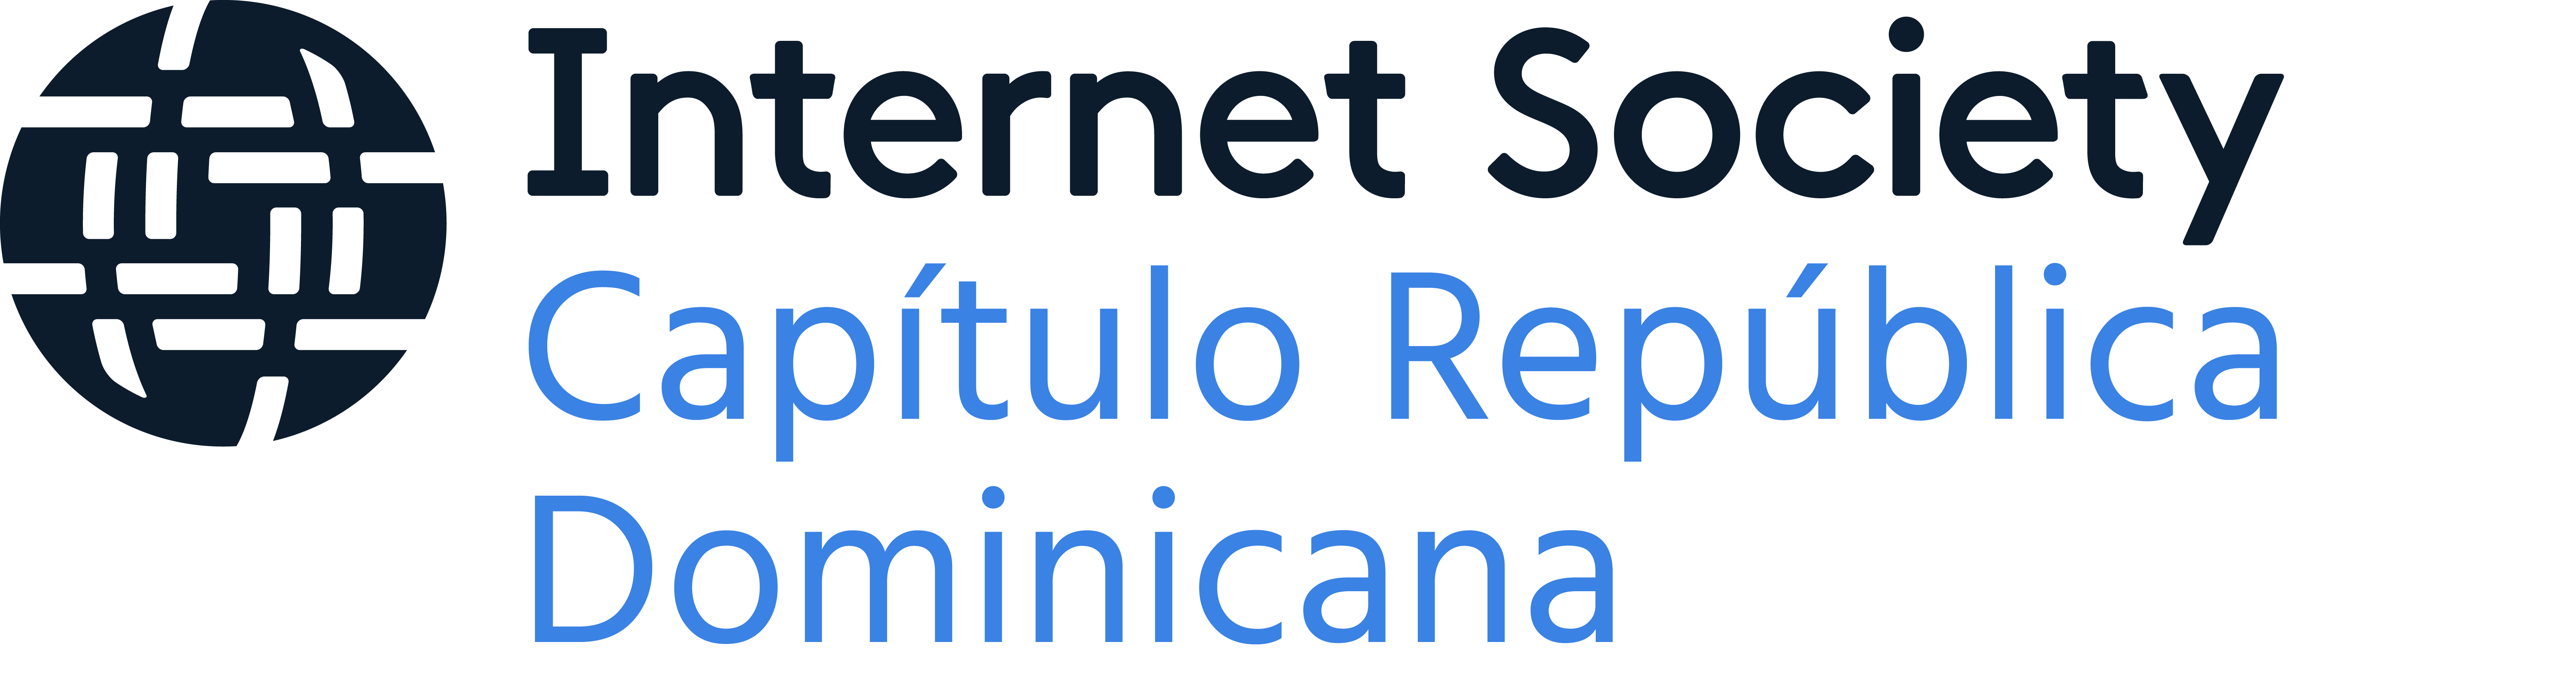 Capitulo Internet Society de la Republica Dominicana